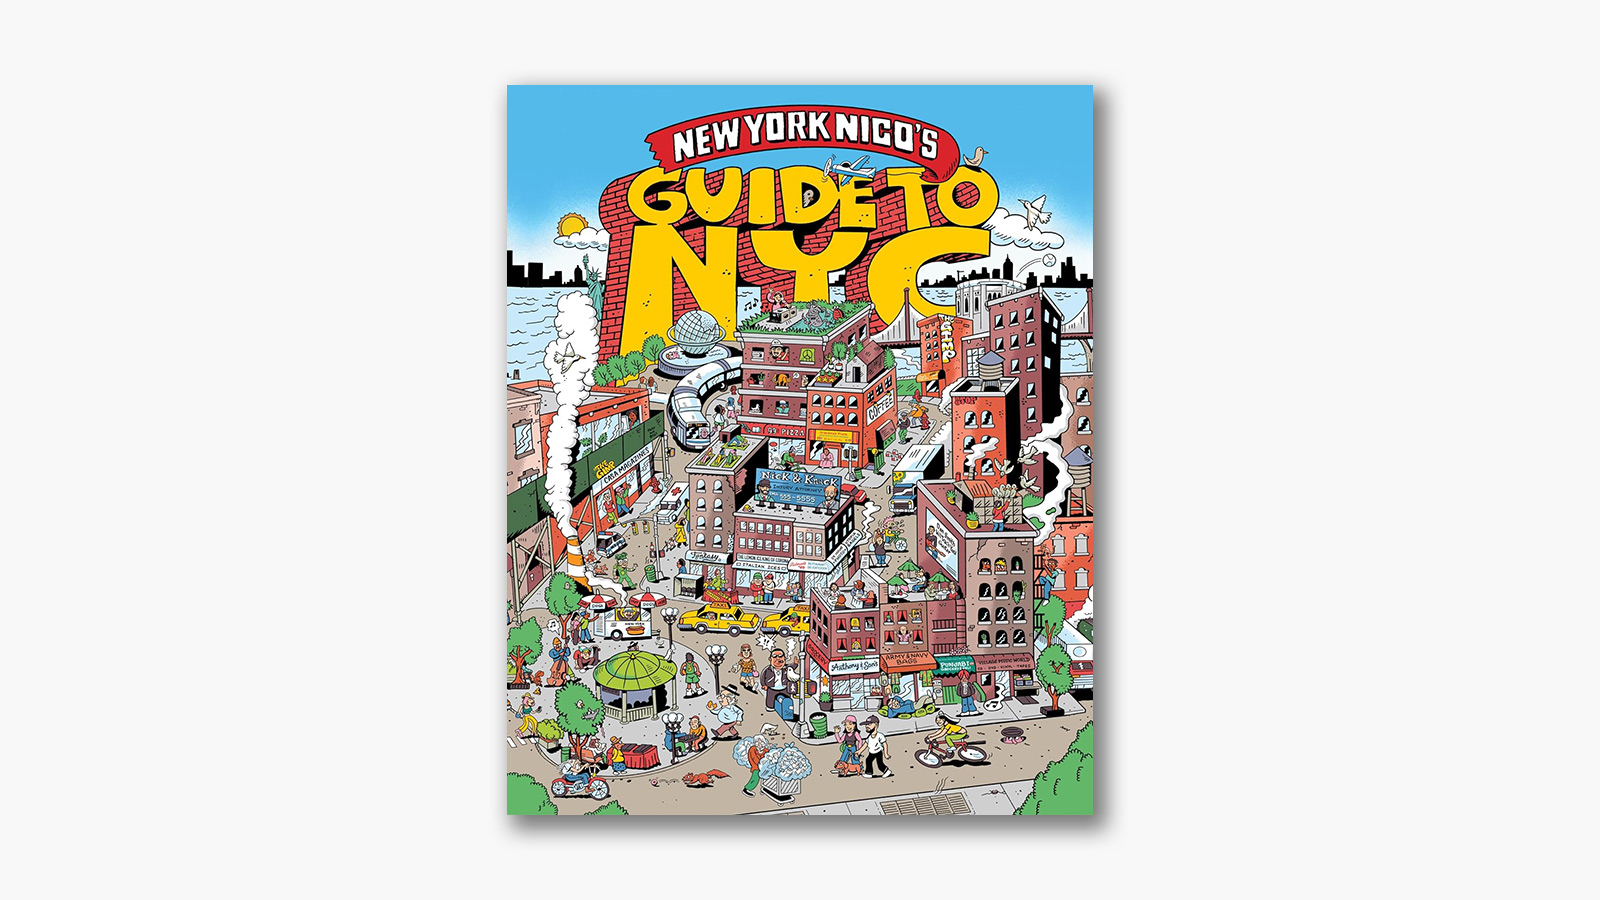 'New York Nico's Guide to NYC'